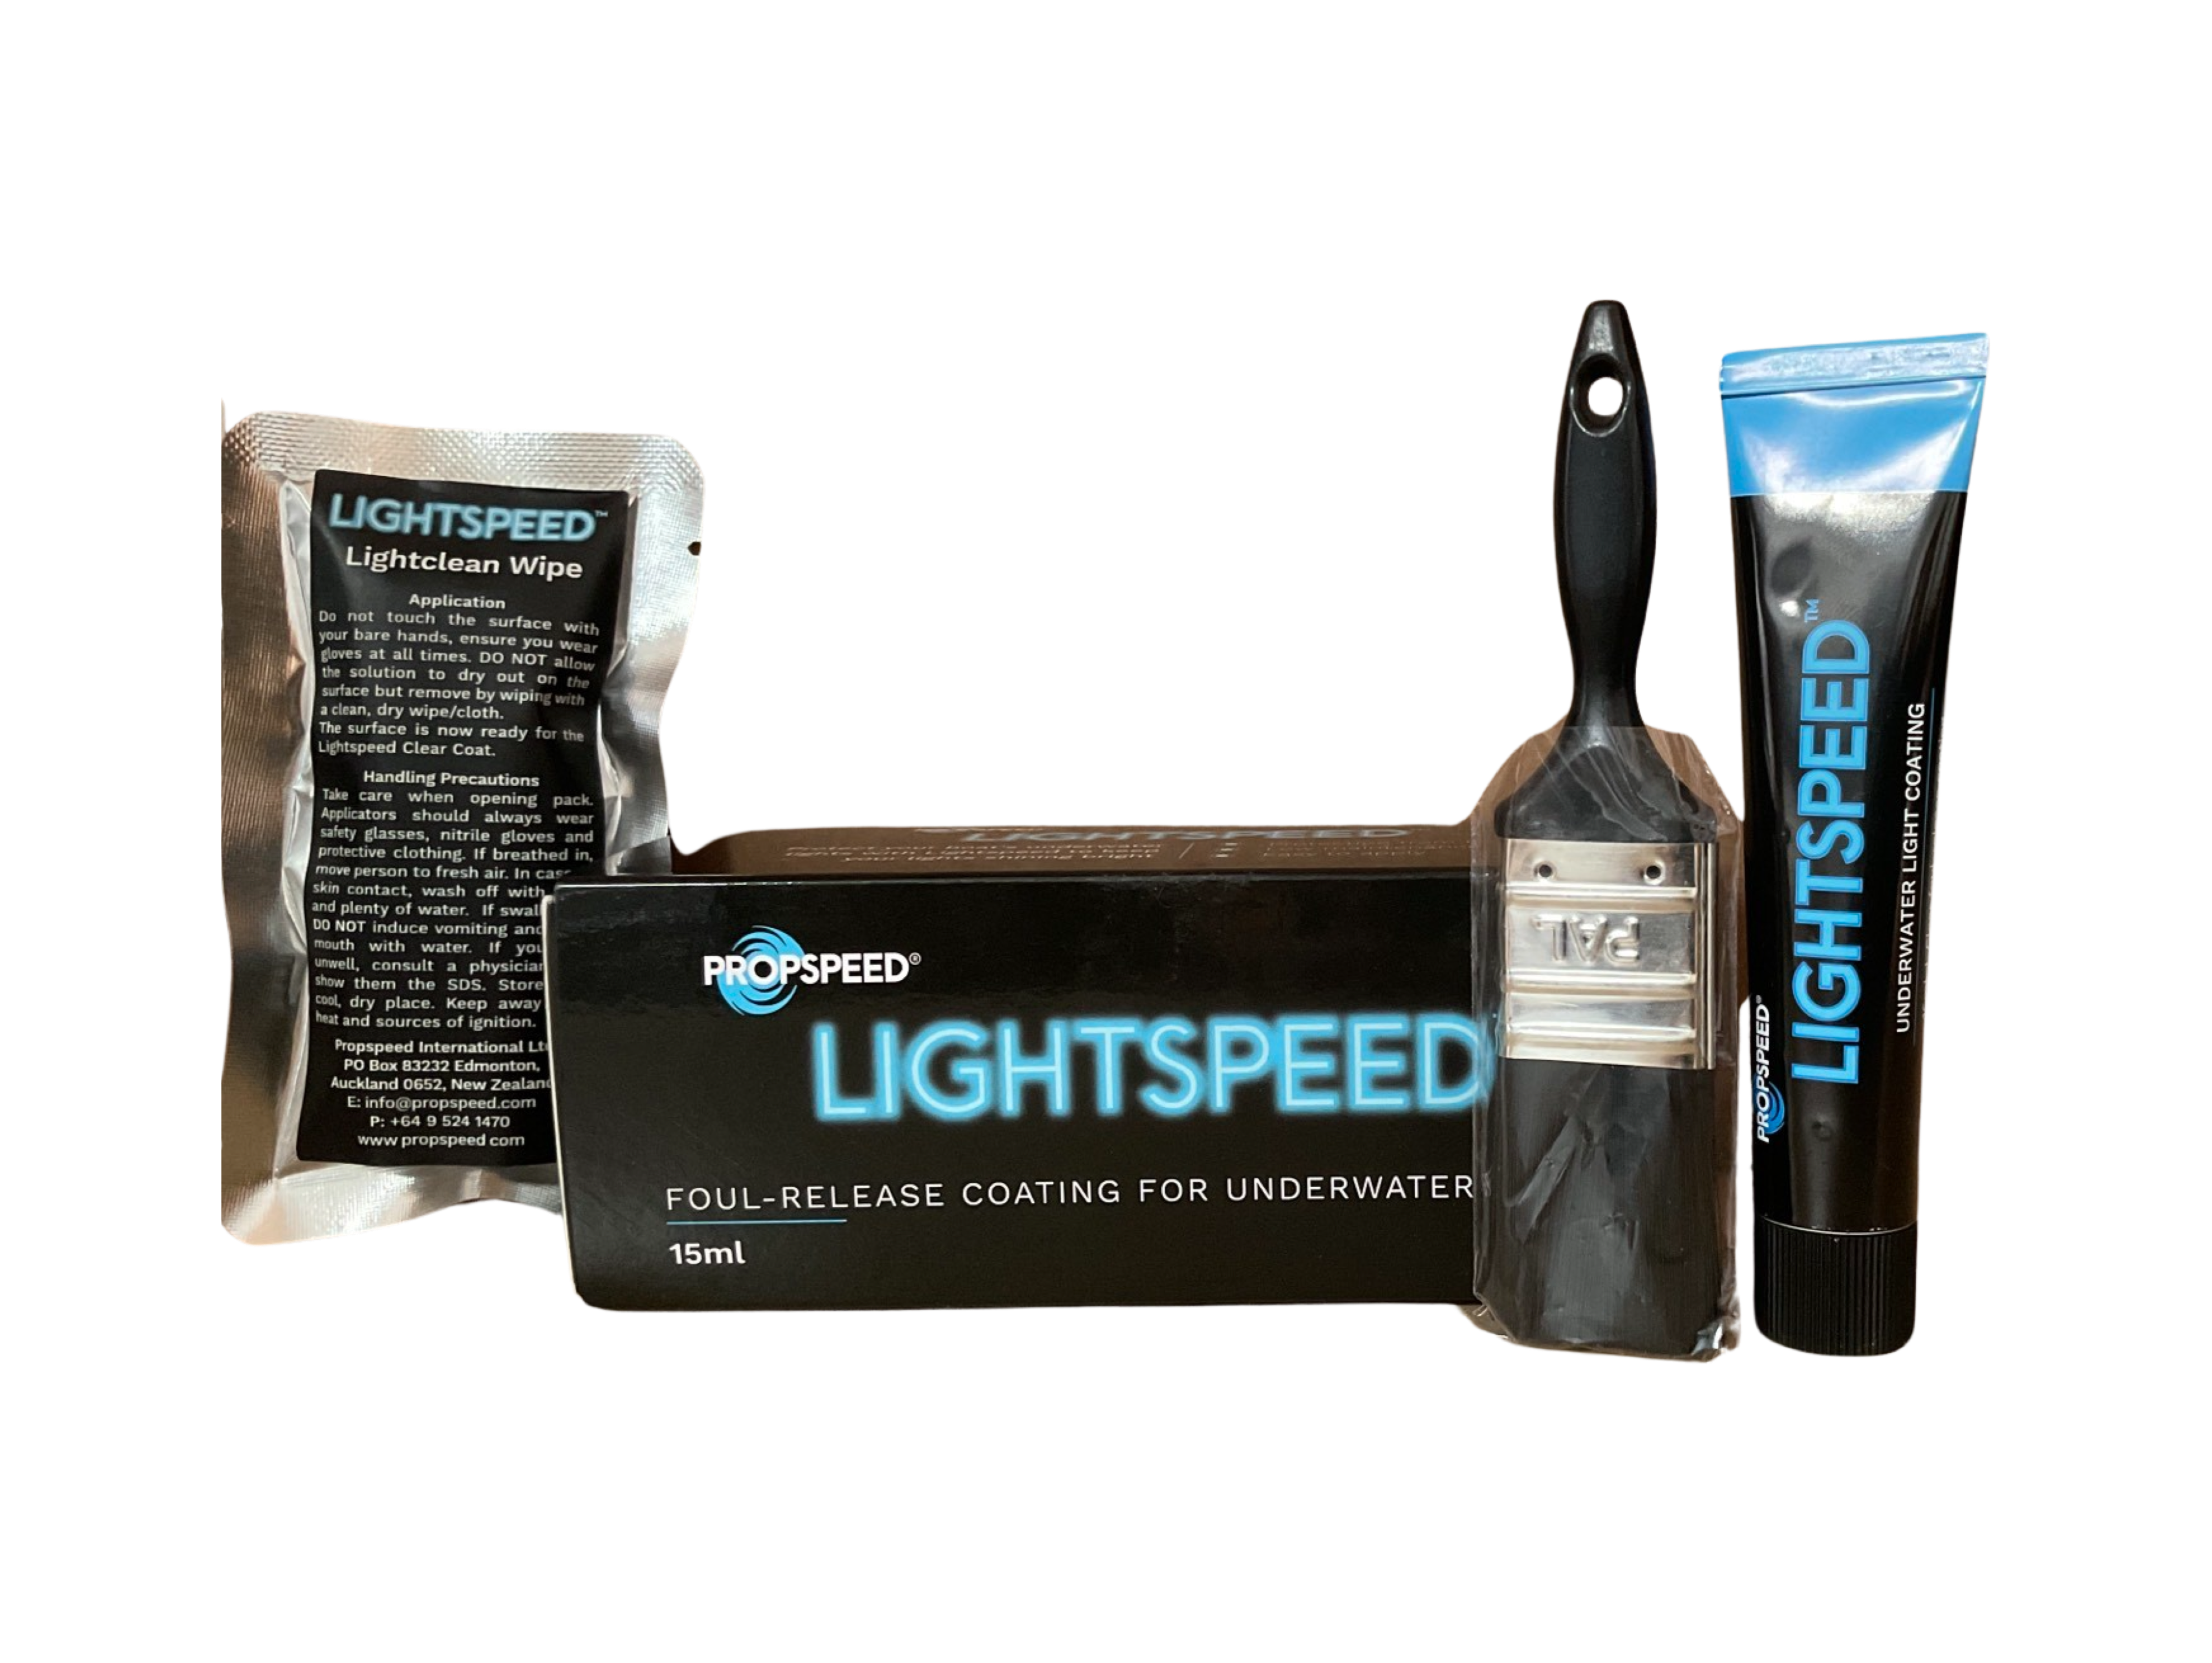 Prospered Lightspeed Foul-Release Coating For Underwater Lights